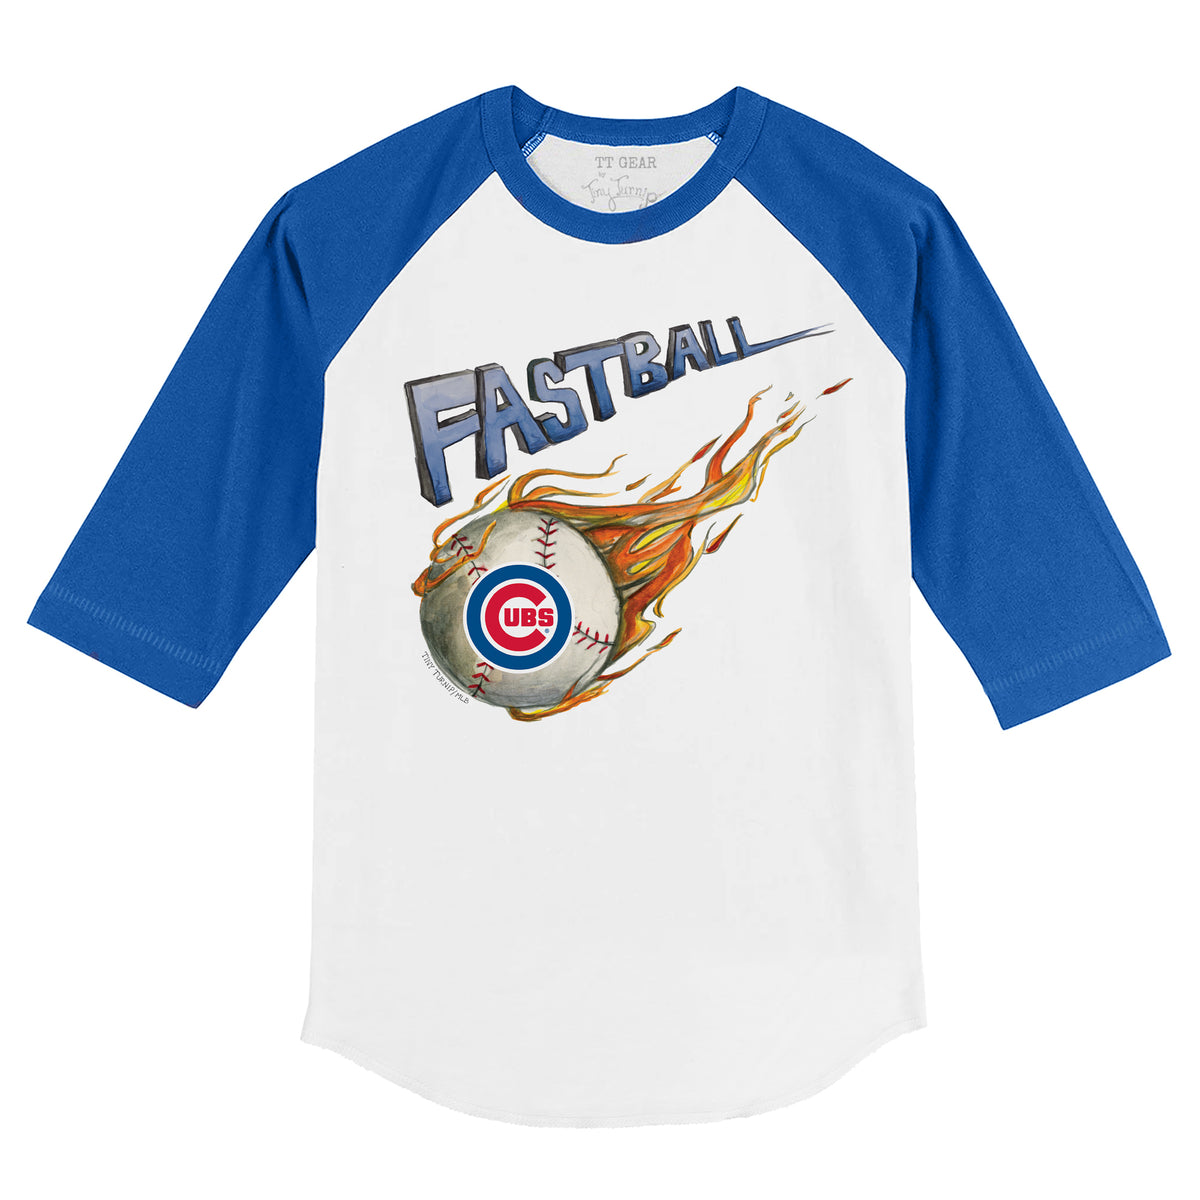 Chicago Cubs Fastball 3/4 Royal Blue Sleeve Raglan Youth XL (14)